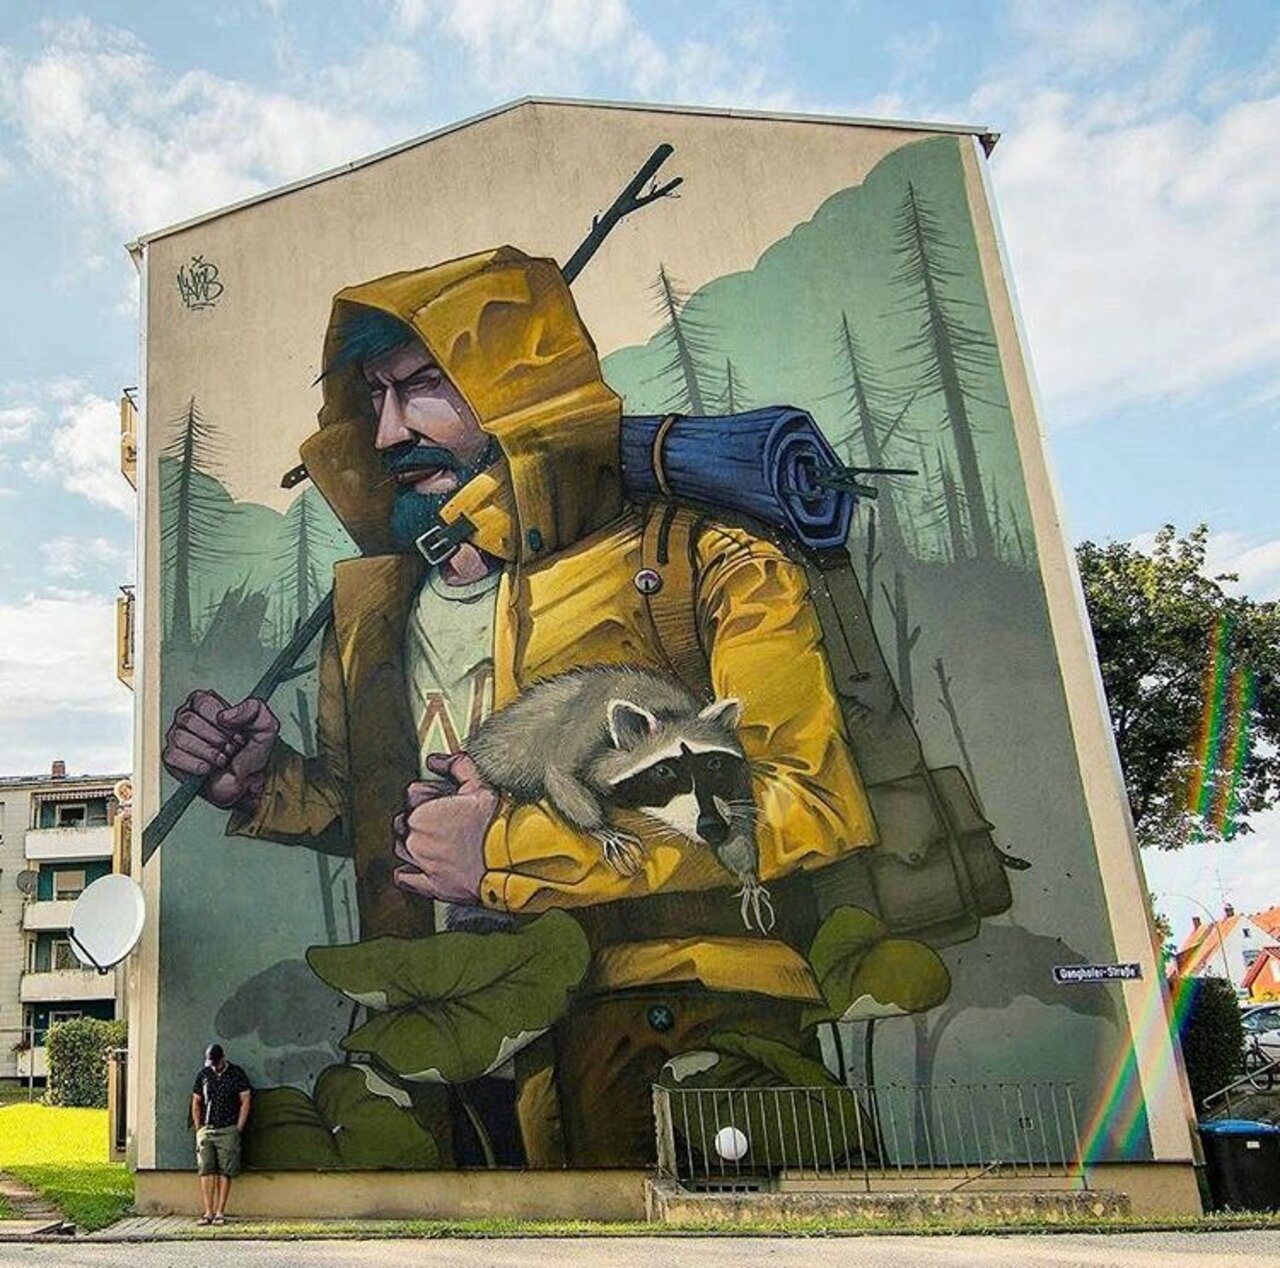 New Street Art by Mr Woodland found in Erding Germany #art #graffiti #mural #streetart https://t.co/hk8Kw9ZYOu